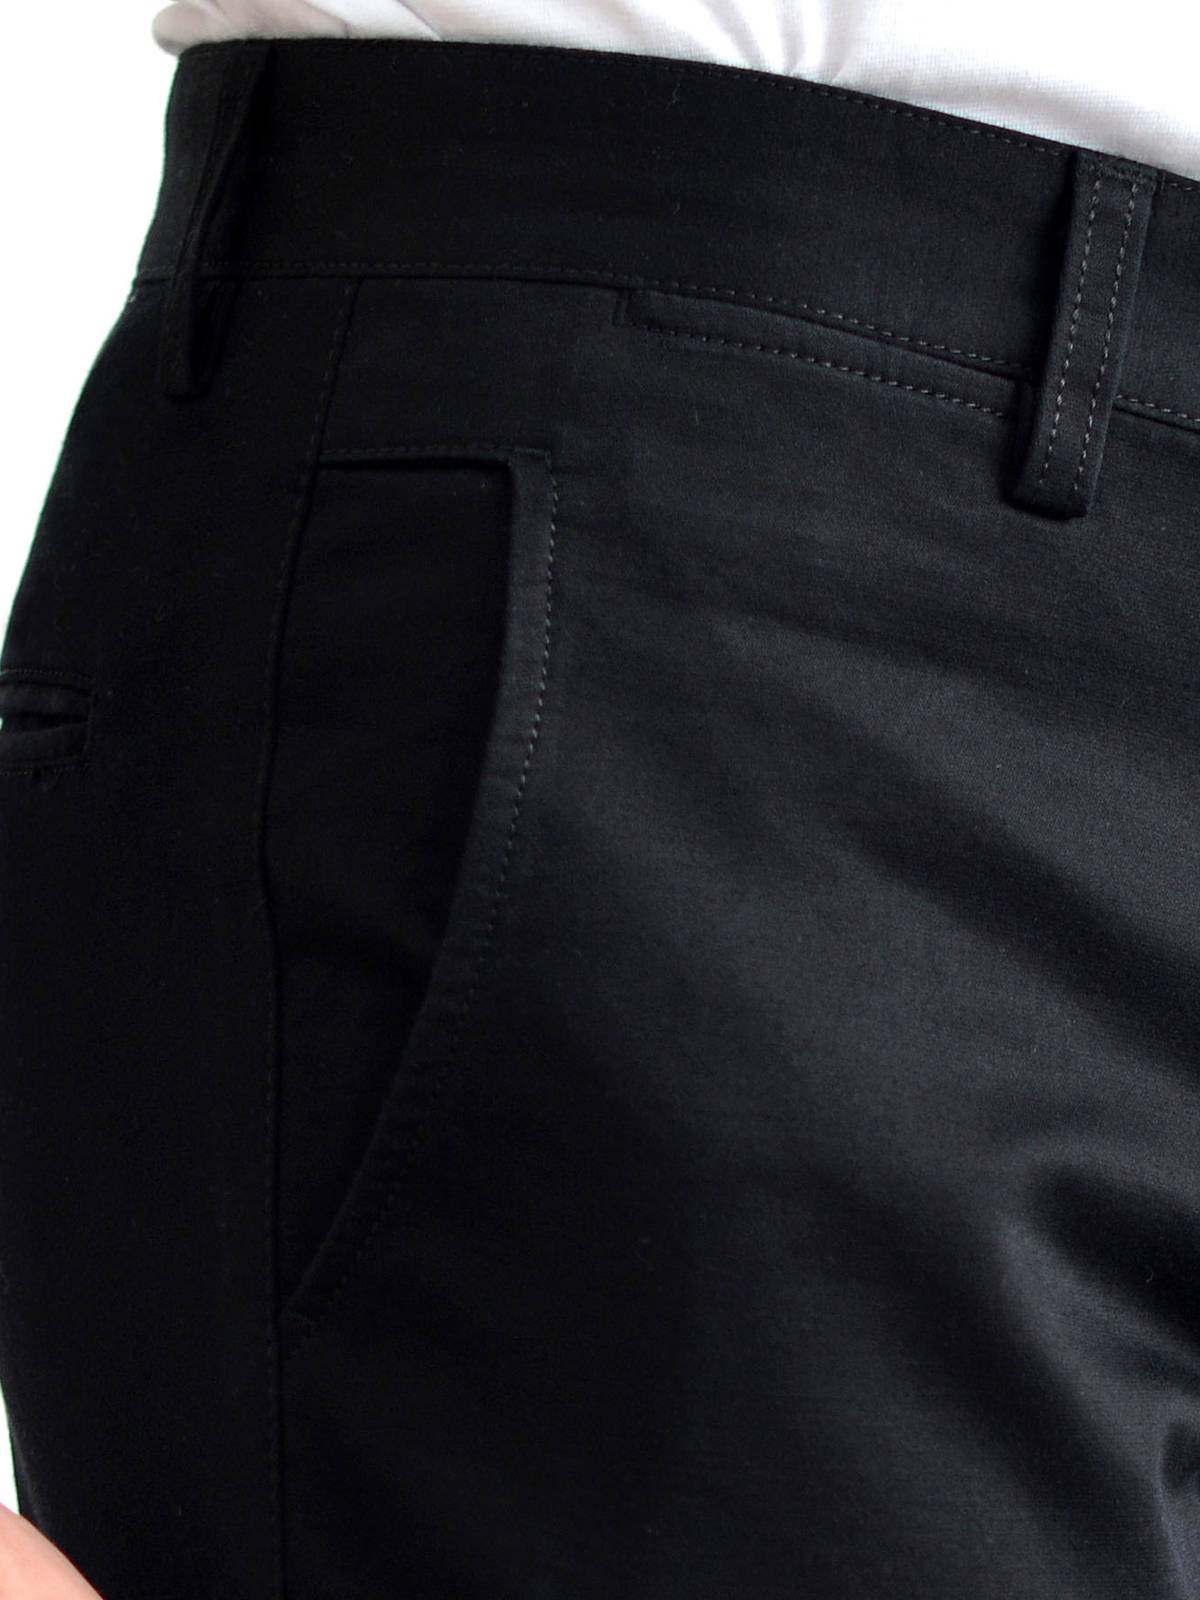 Pantaloni negri din bumbac si elastan - 60172 € 11.25 img3